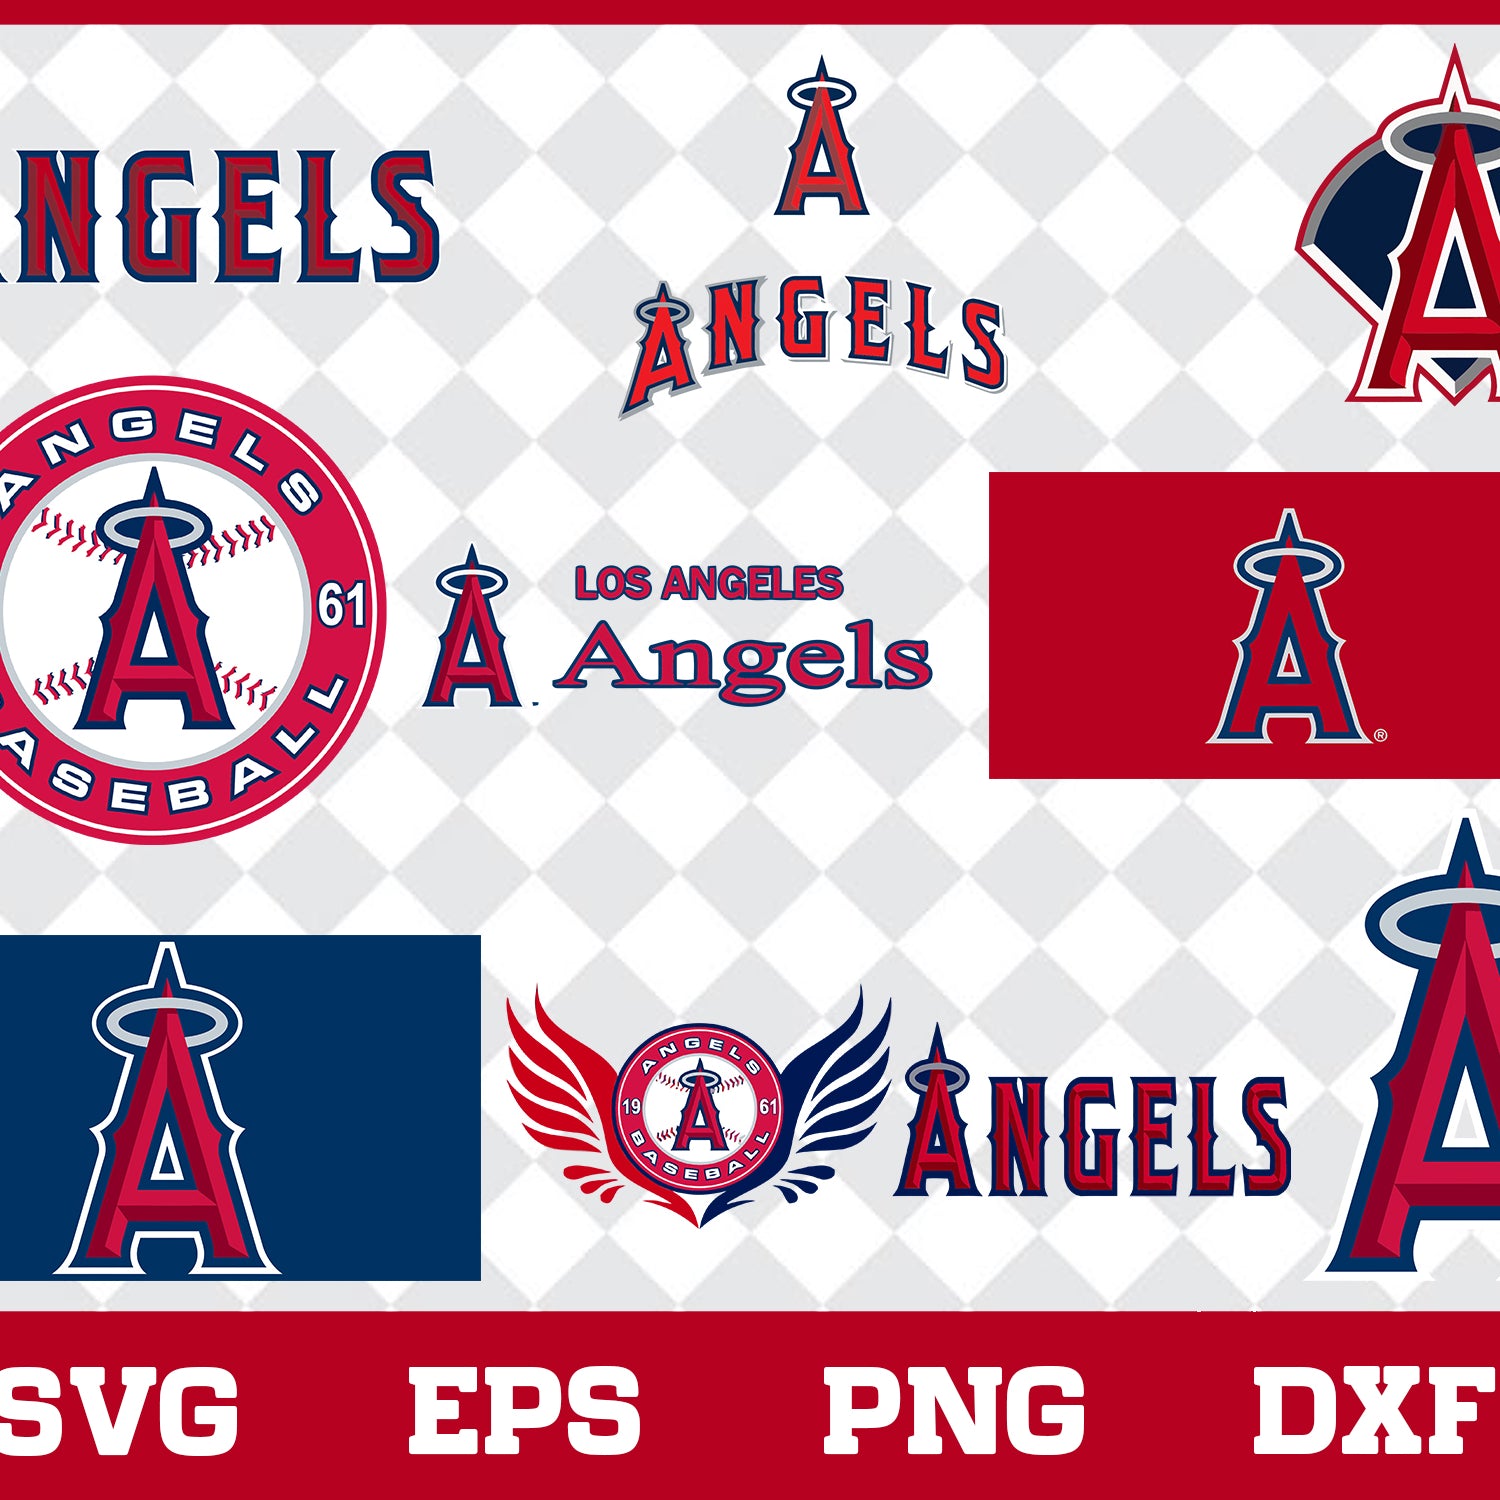 Los Angeles Angels bundle svg, Los Angeles Angels svg, Angels svg, Angels svg for cut, png, dxf, eps digital file MBL30012113